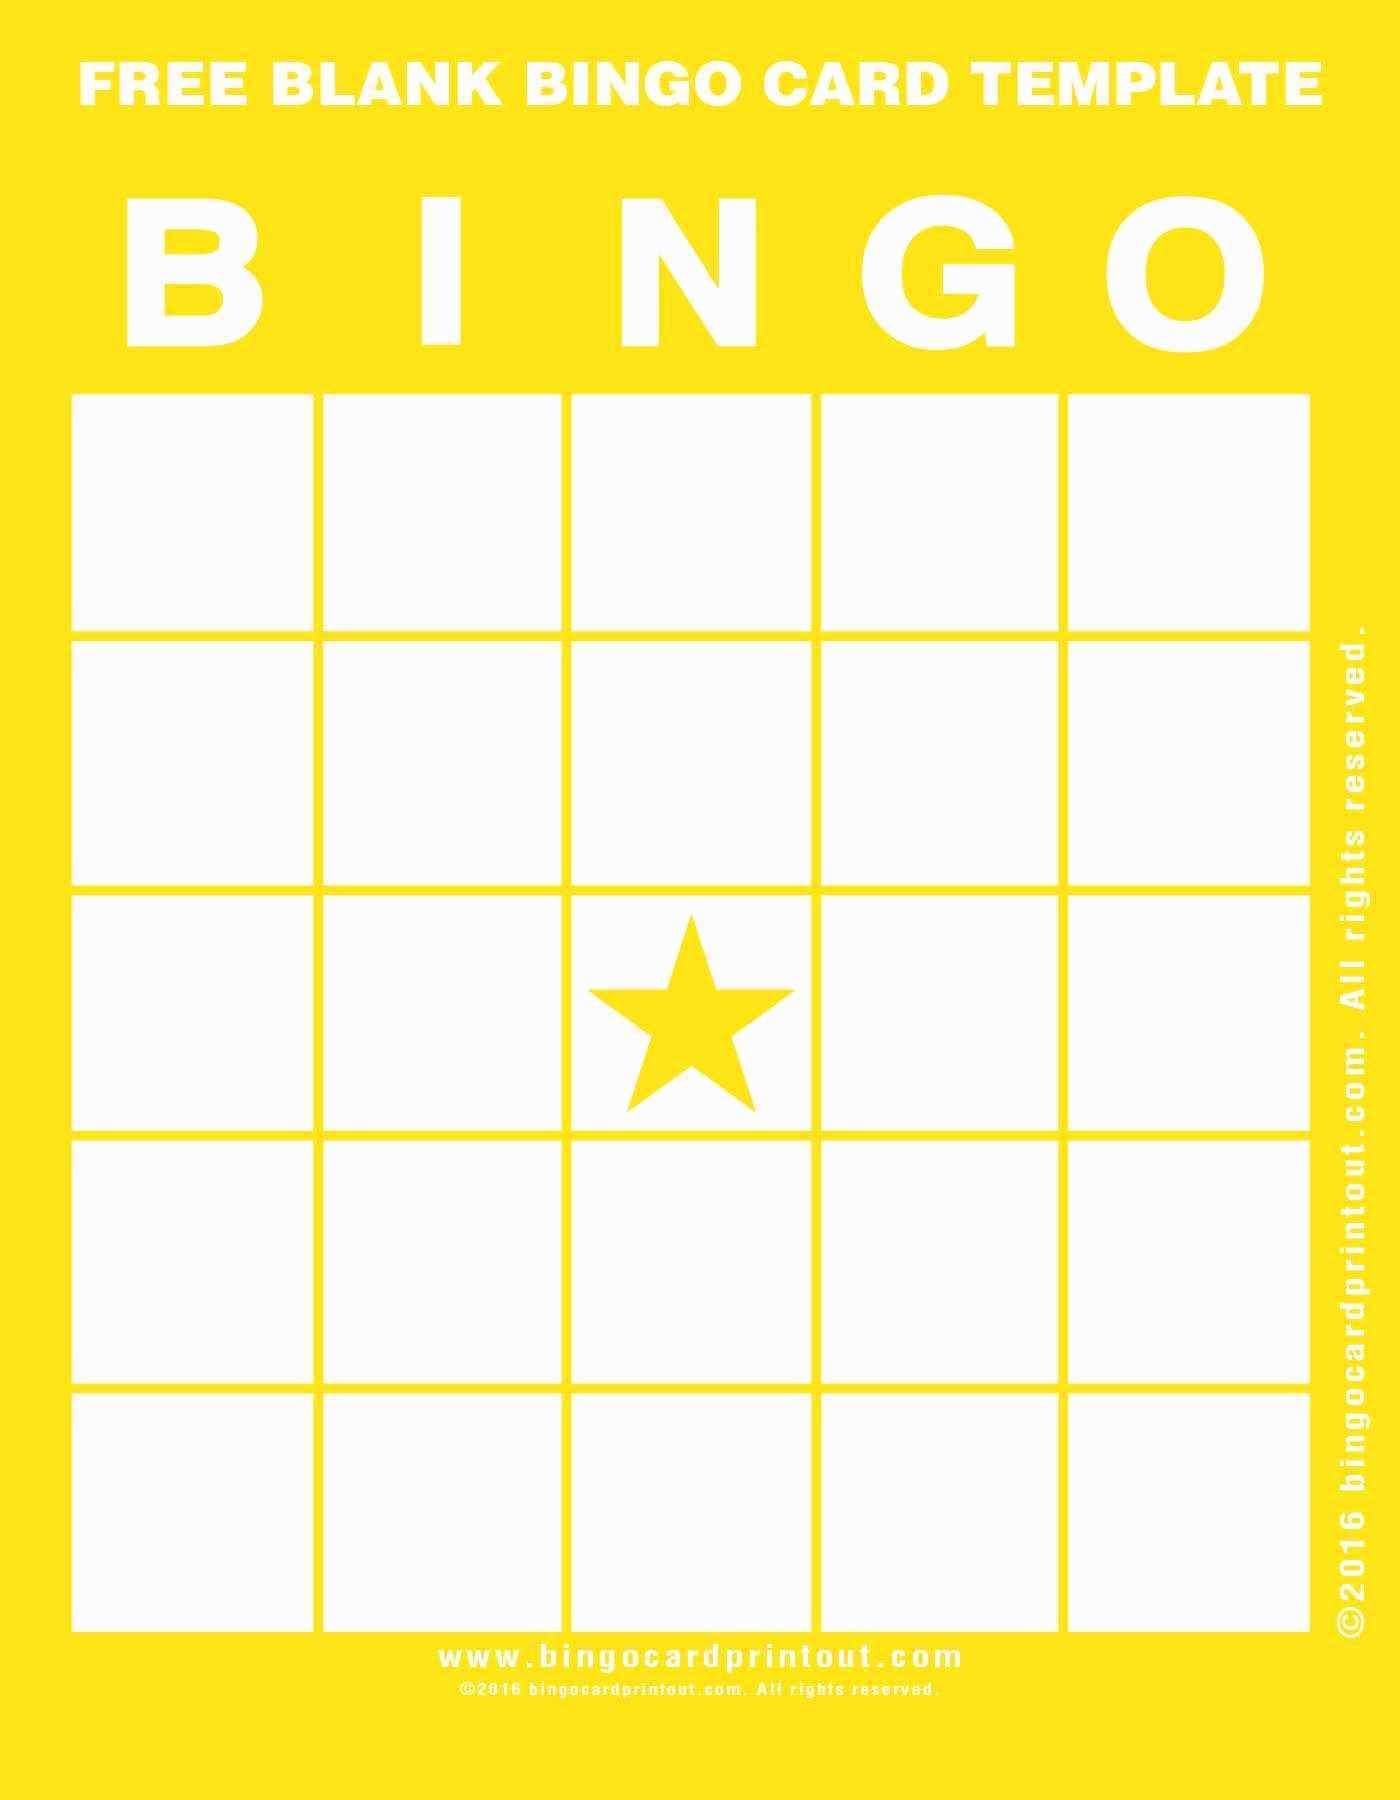 22 Online Bingo Card Template 4X4 PSD File for Bingo Card Template 4X4